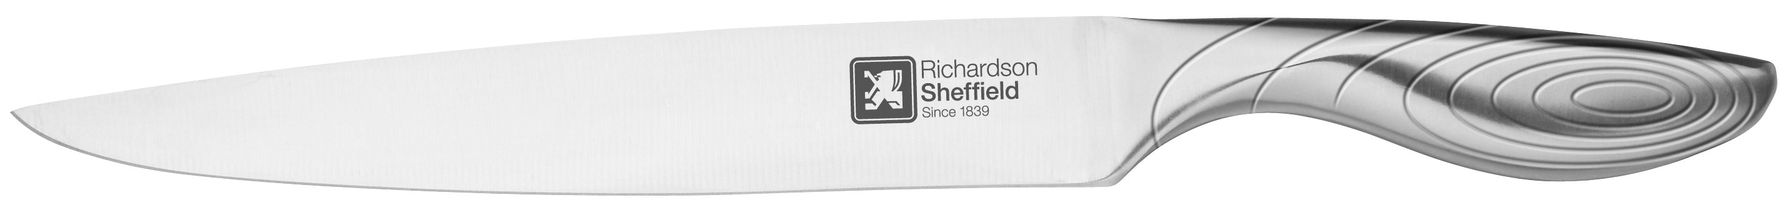 Richardson Sheffield Meat Knife Forme Contours 20 cm